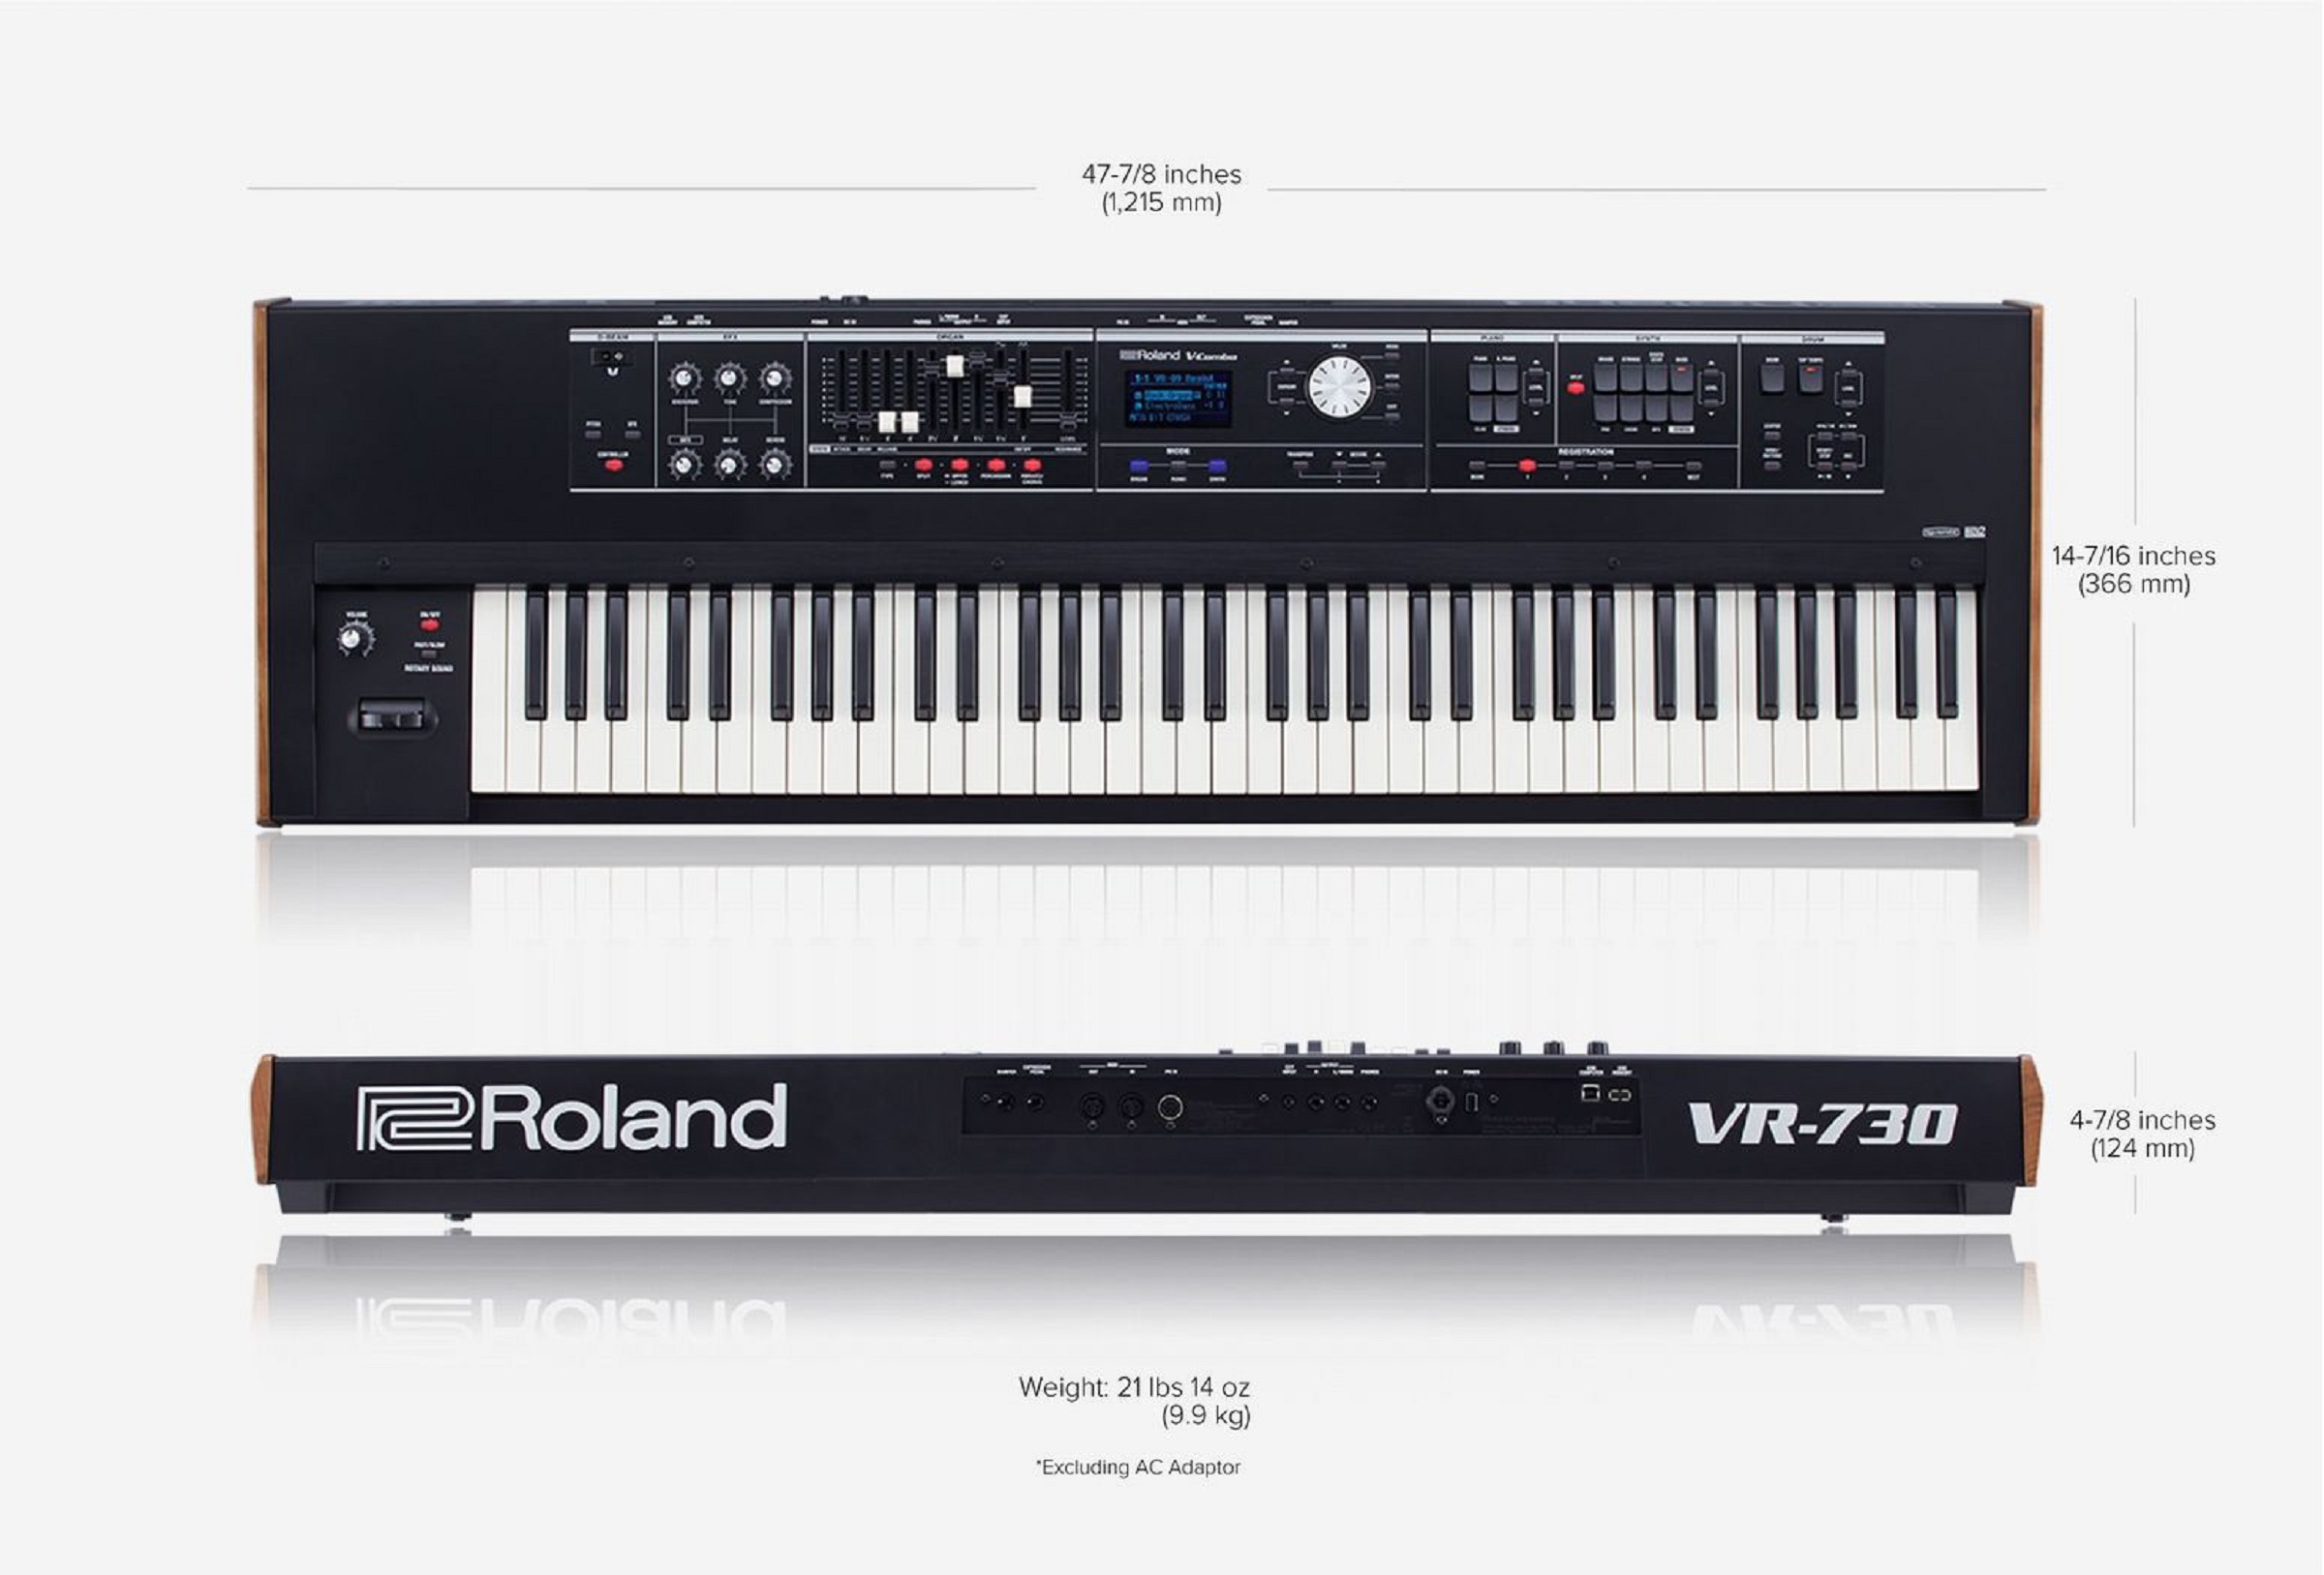 Roland VR-730 Live Performance Keyboard